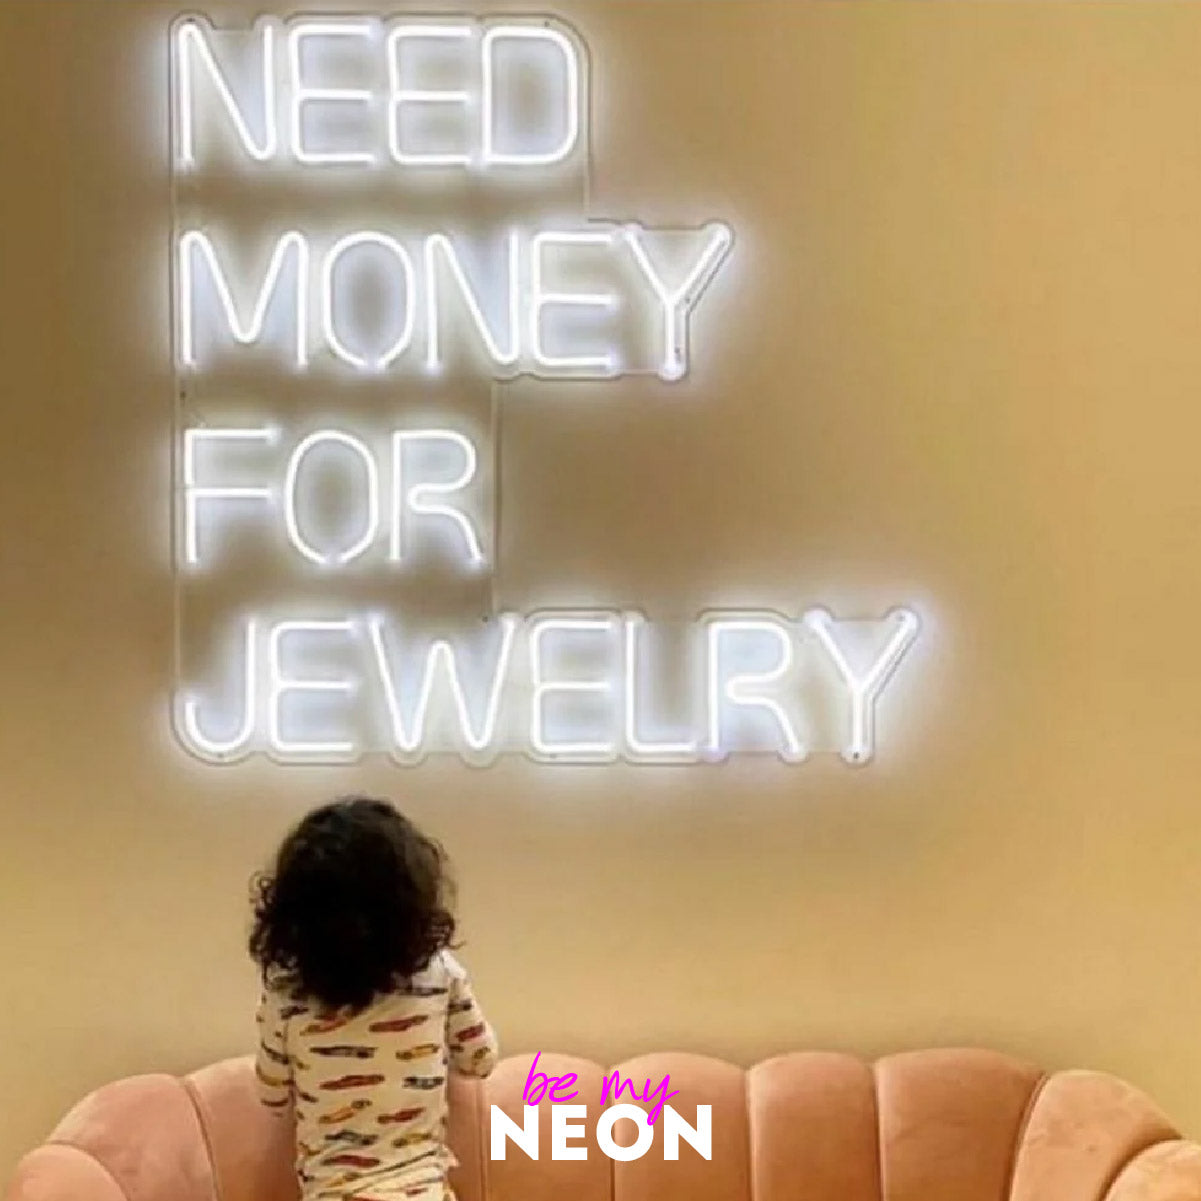 "Need Money For Jewelry" LED Neonschild